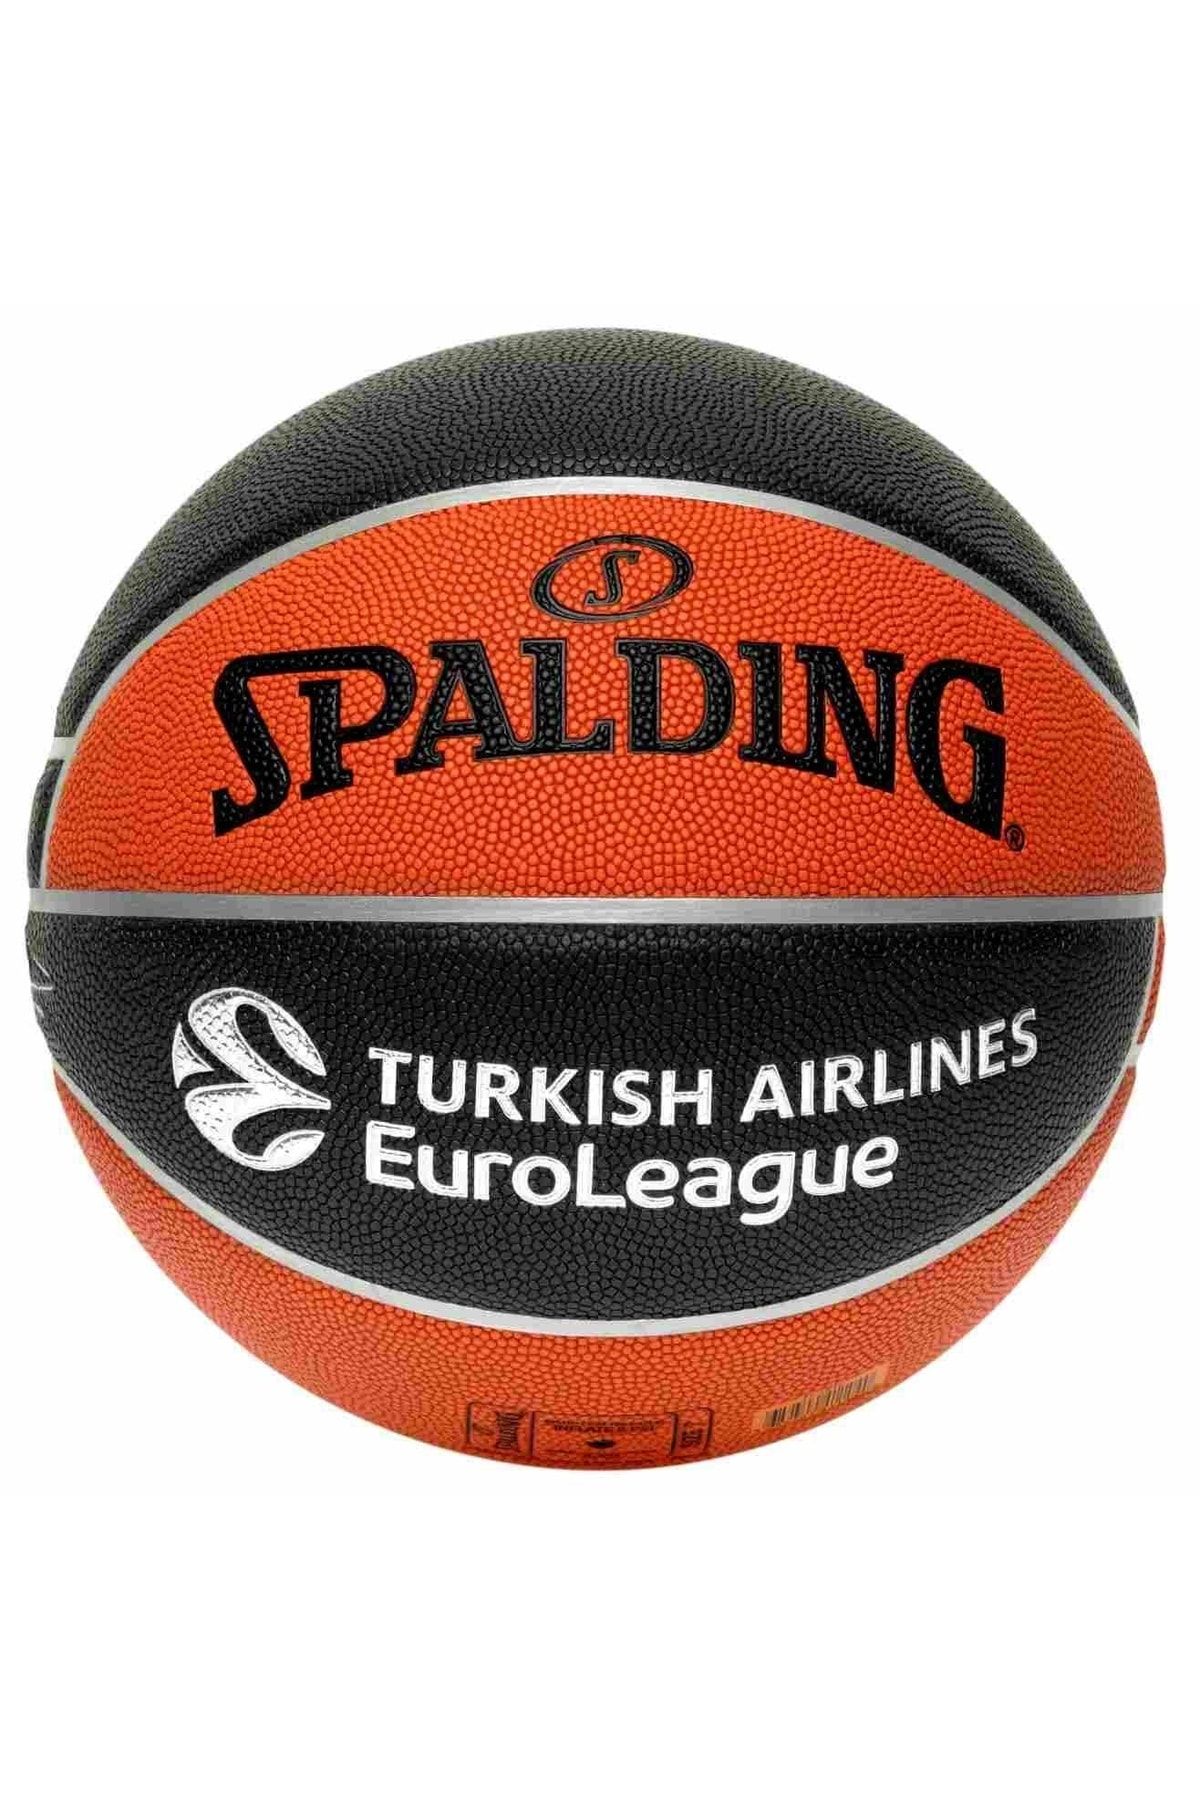 Spalding Basketbol Topu 2021 Tf-500 Rep/euro Size:5 77103z